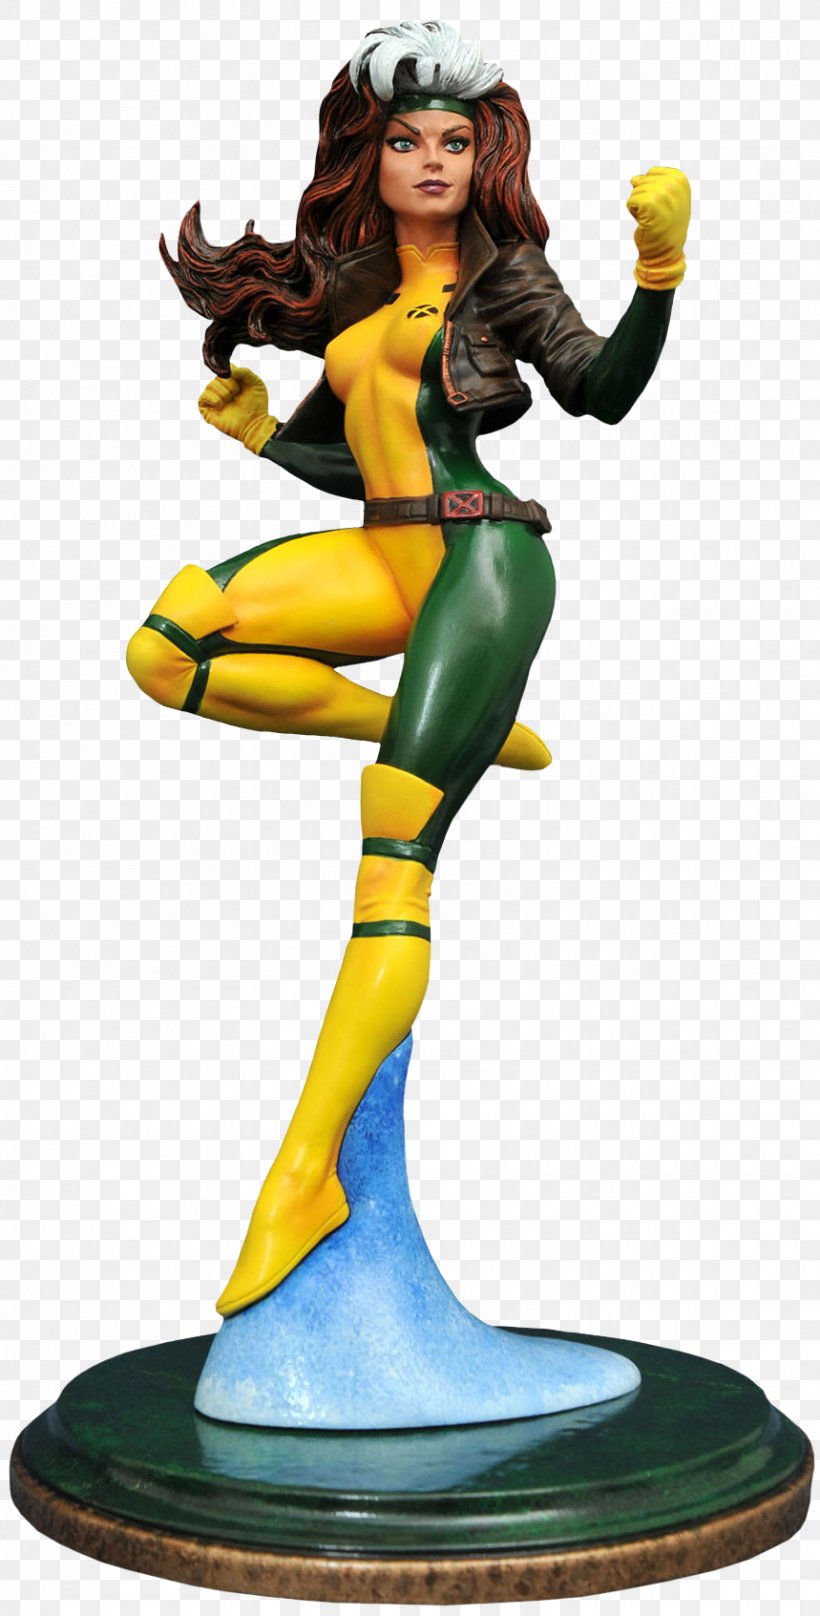 Marvel Select X-Men Rogue Action Figure